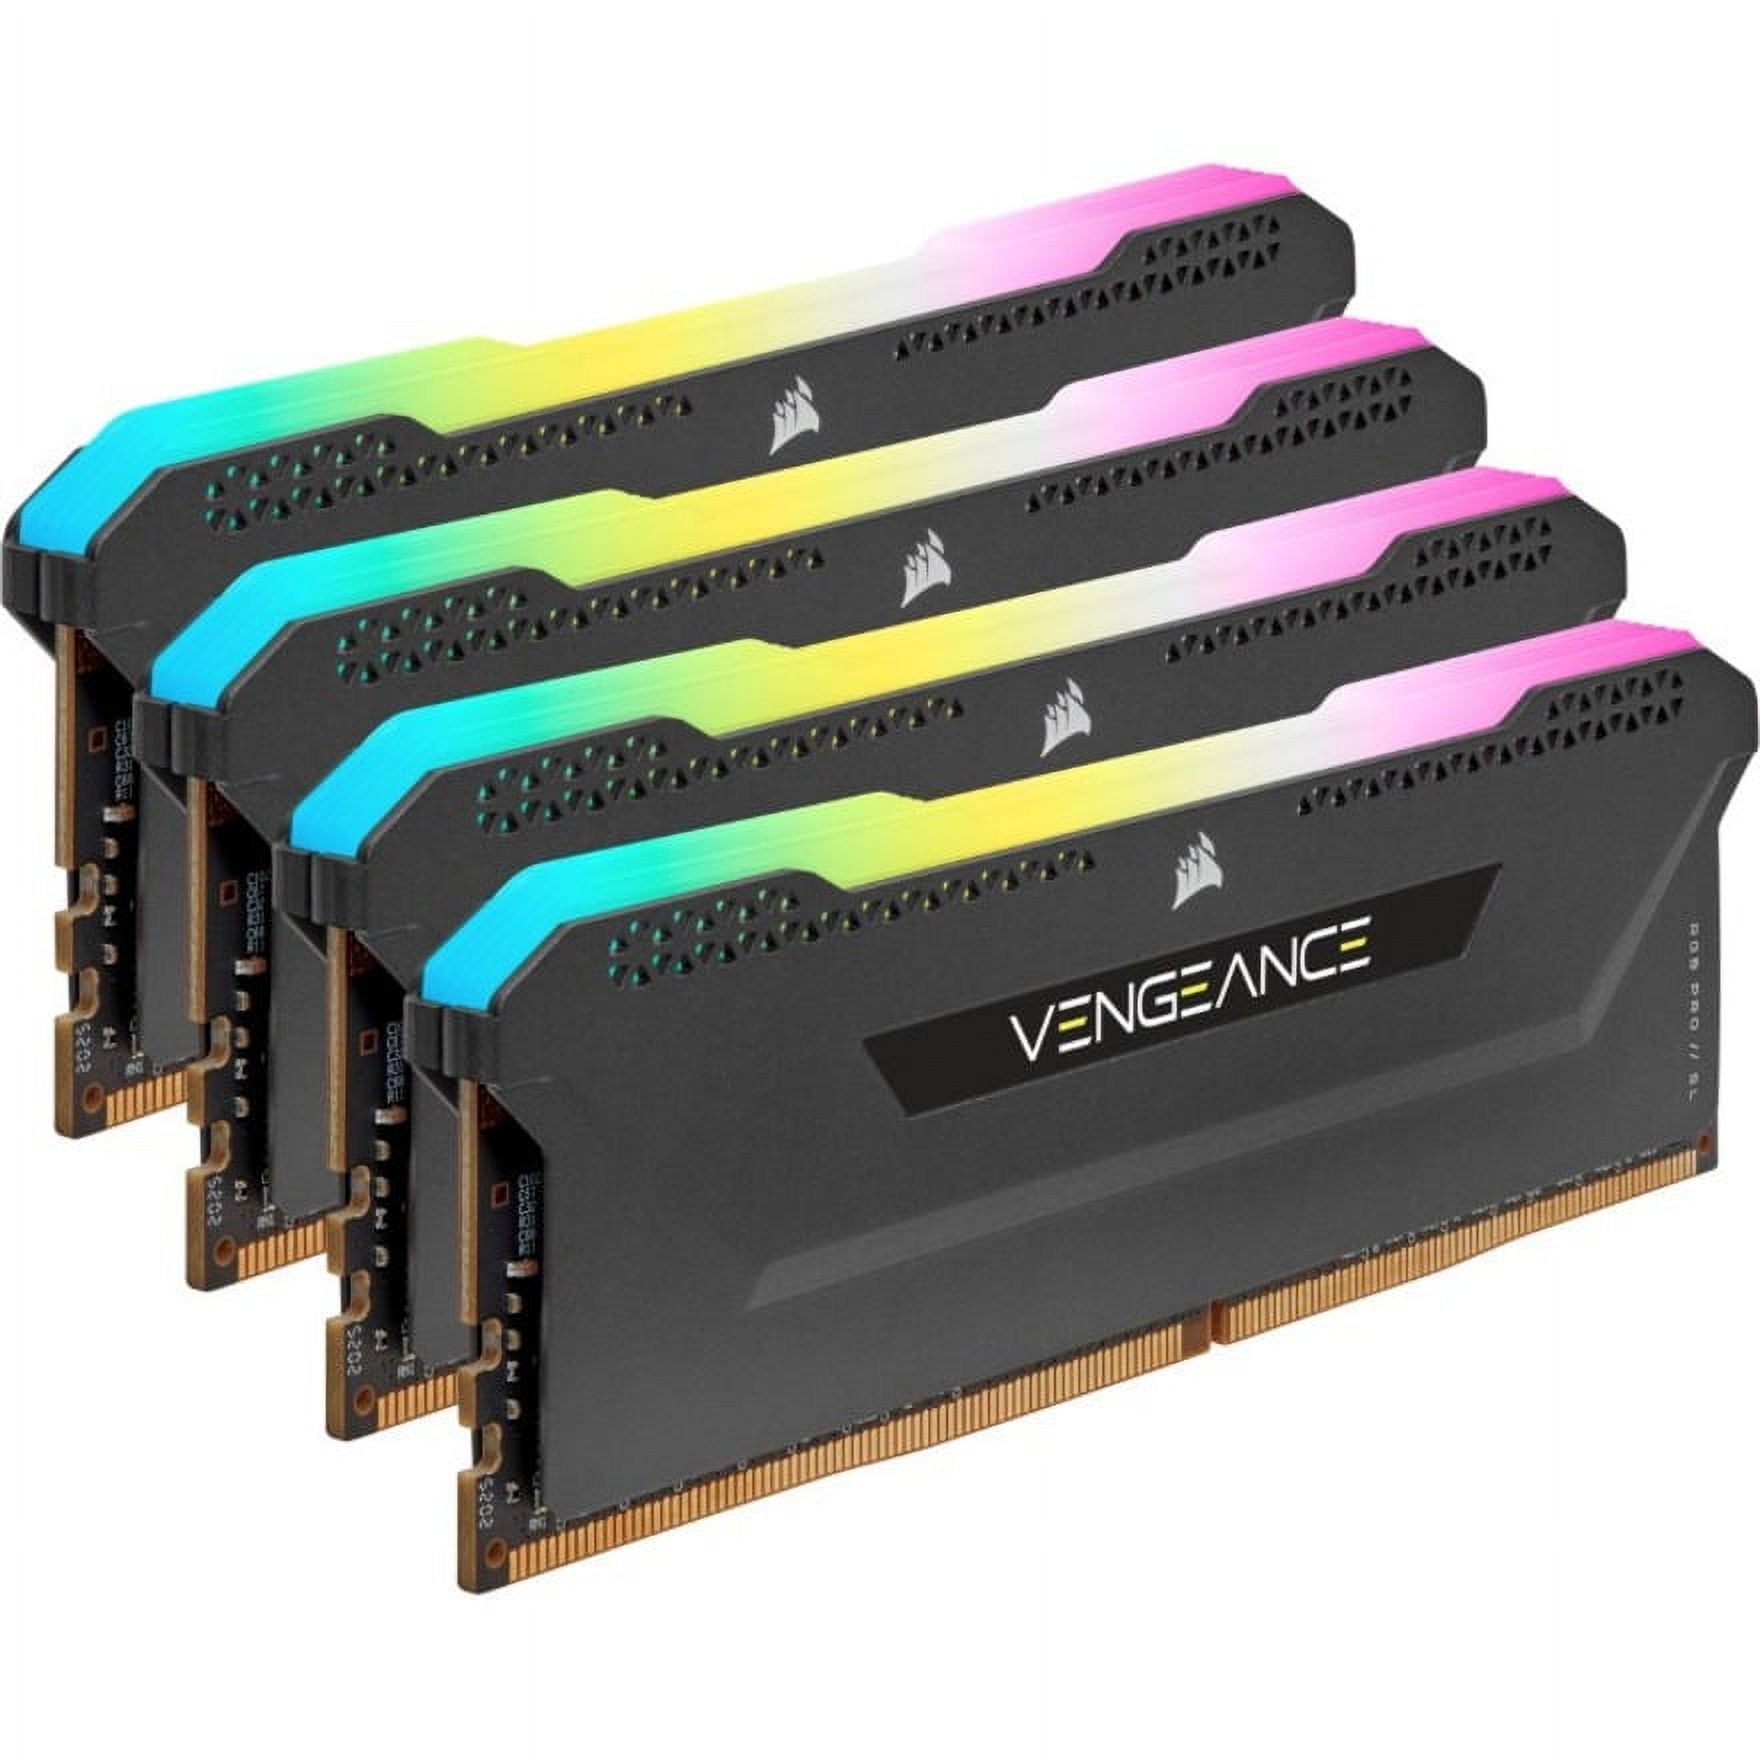 DRAM Black Pro RGB Vengeance Corsair 3200MHz - 128GB SL (4x32GB) Memory Kit DDR4 C16